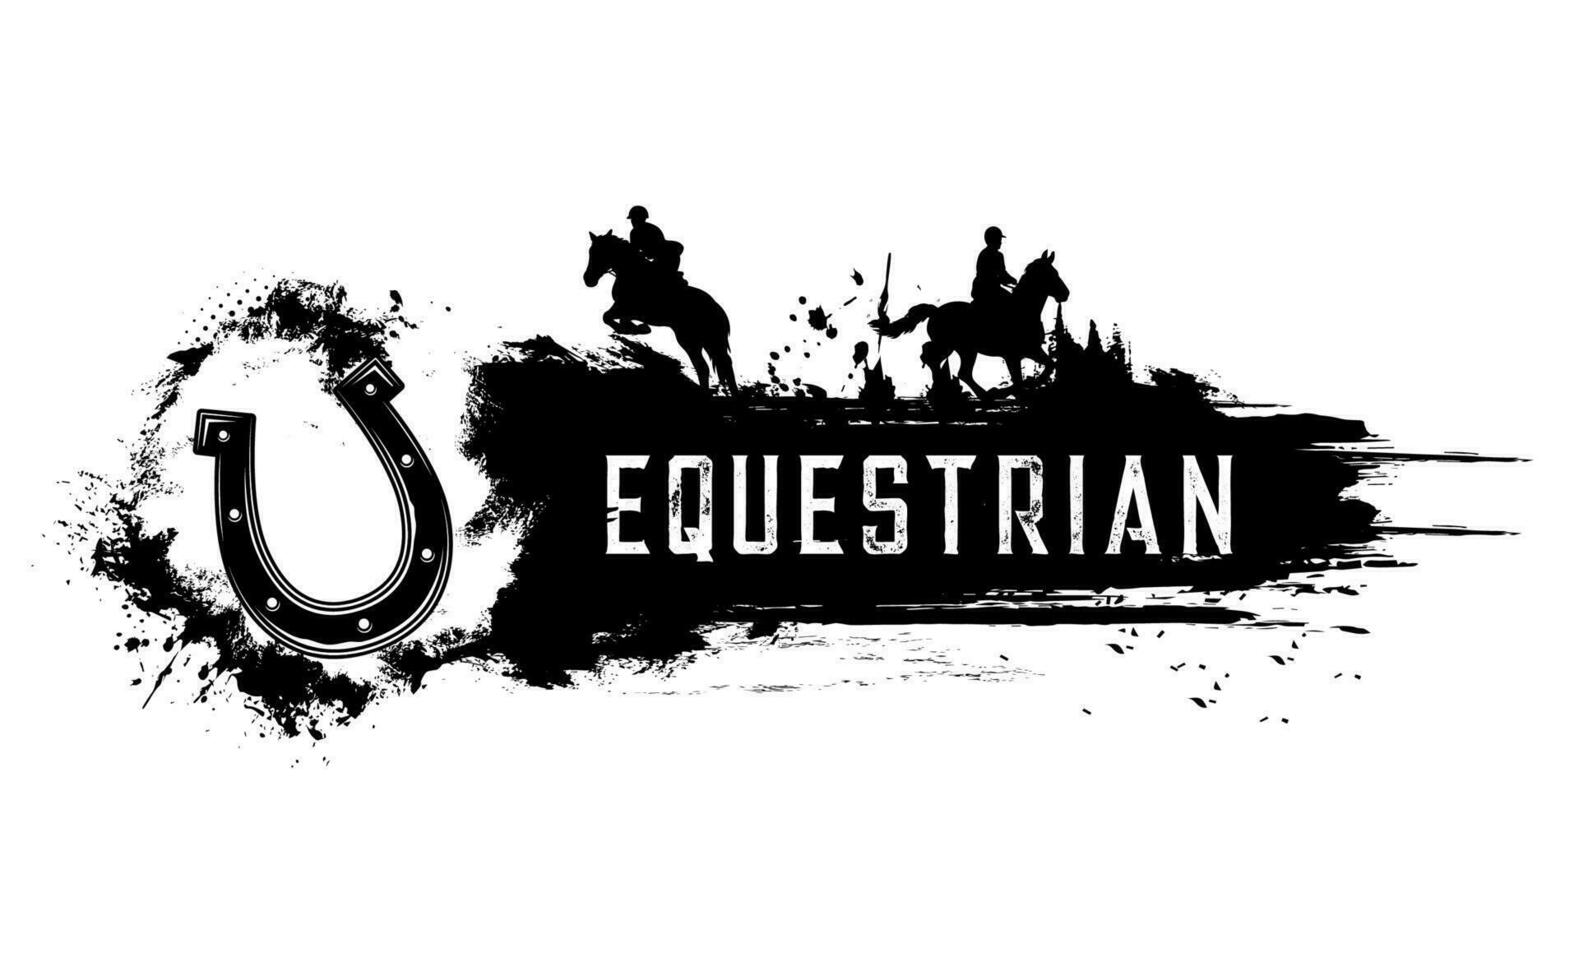 Equestrian sport, horse riding club poster vector